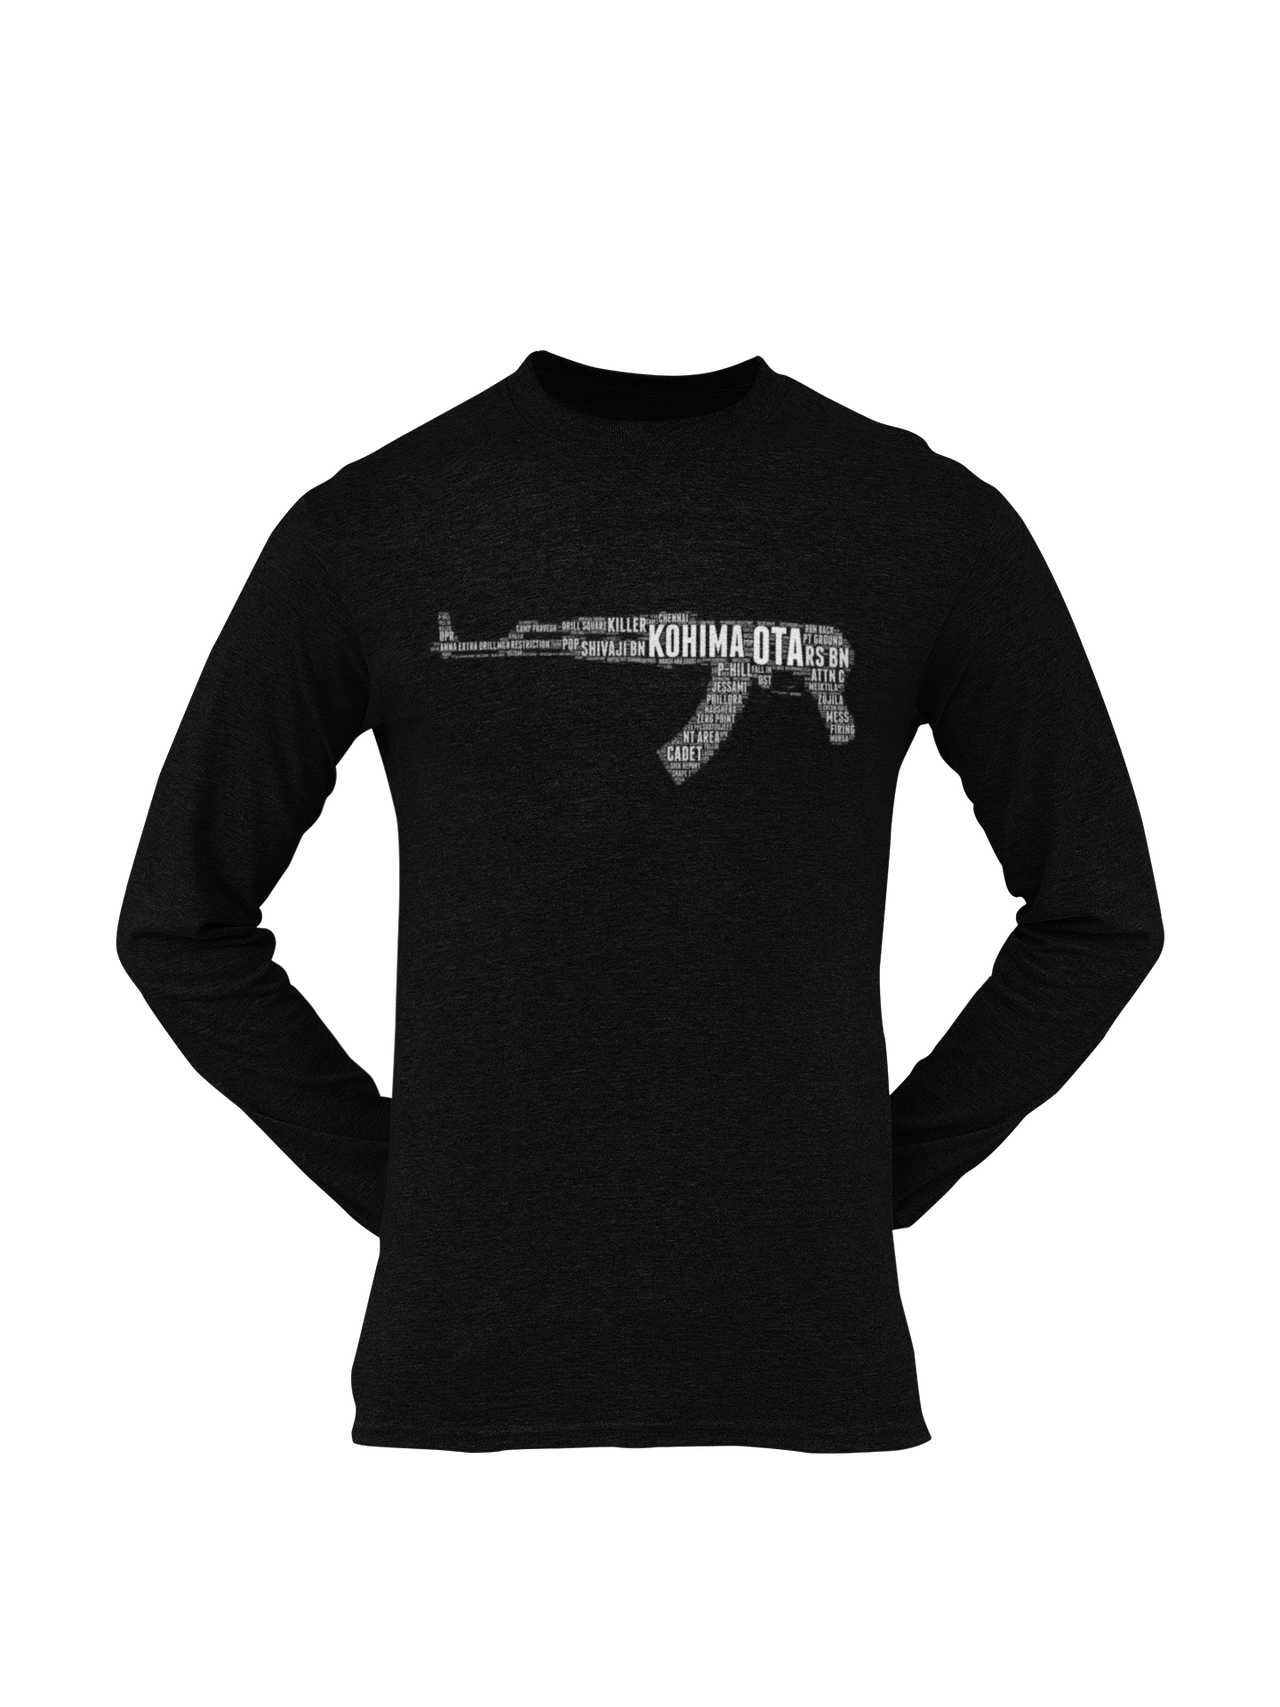 OTA T-shirt - Word Cloud Kohima - AK-47 Folding Stock (Men)